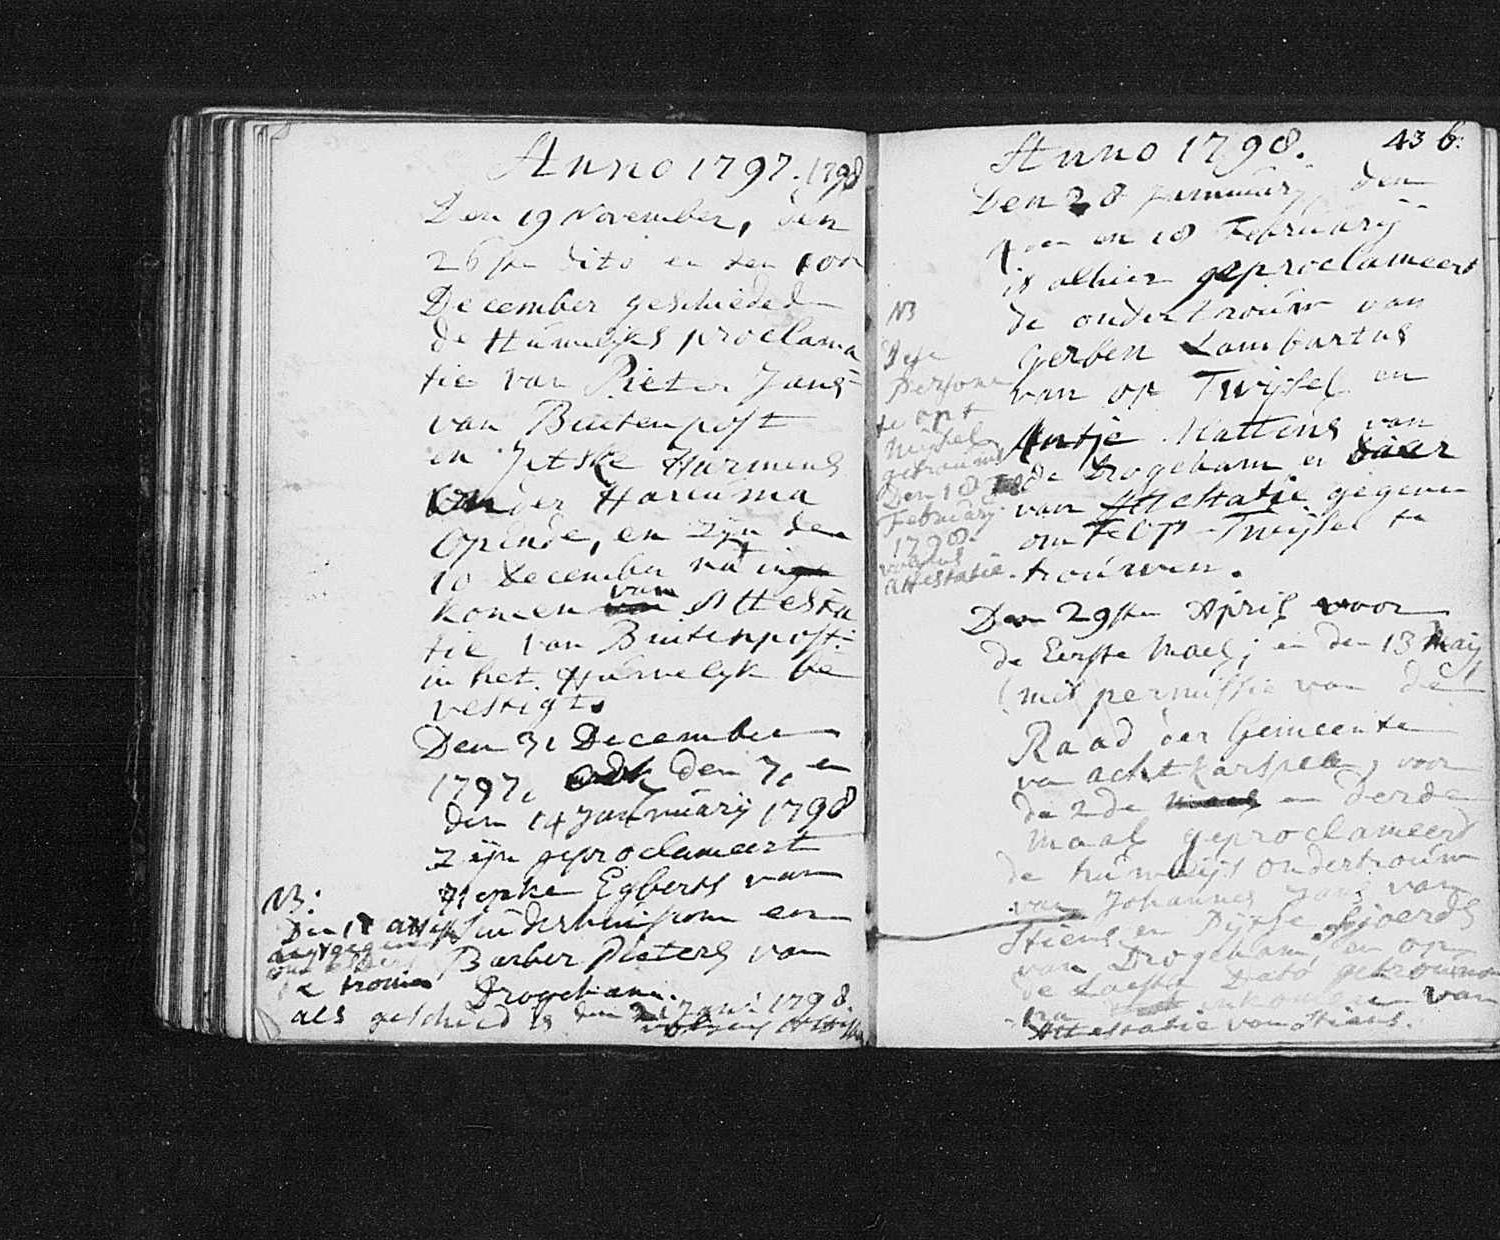 Registry of marriages, Nederlands Hervormde kerk, Drogeham, 1796-1798, sheet 43